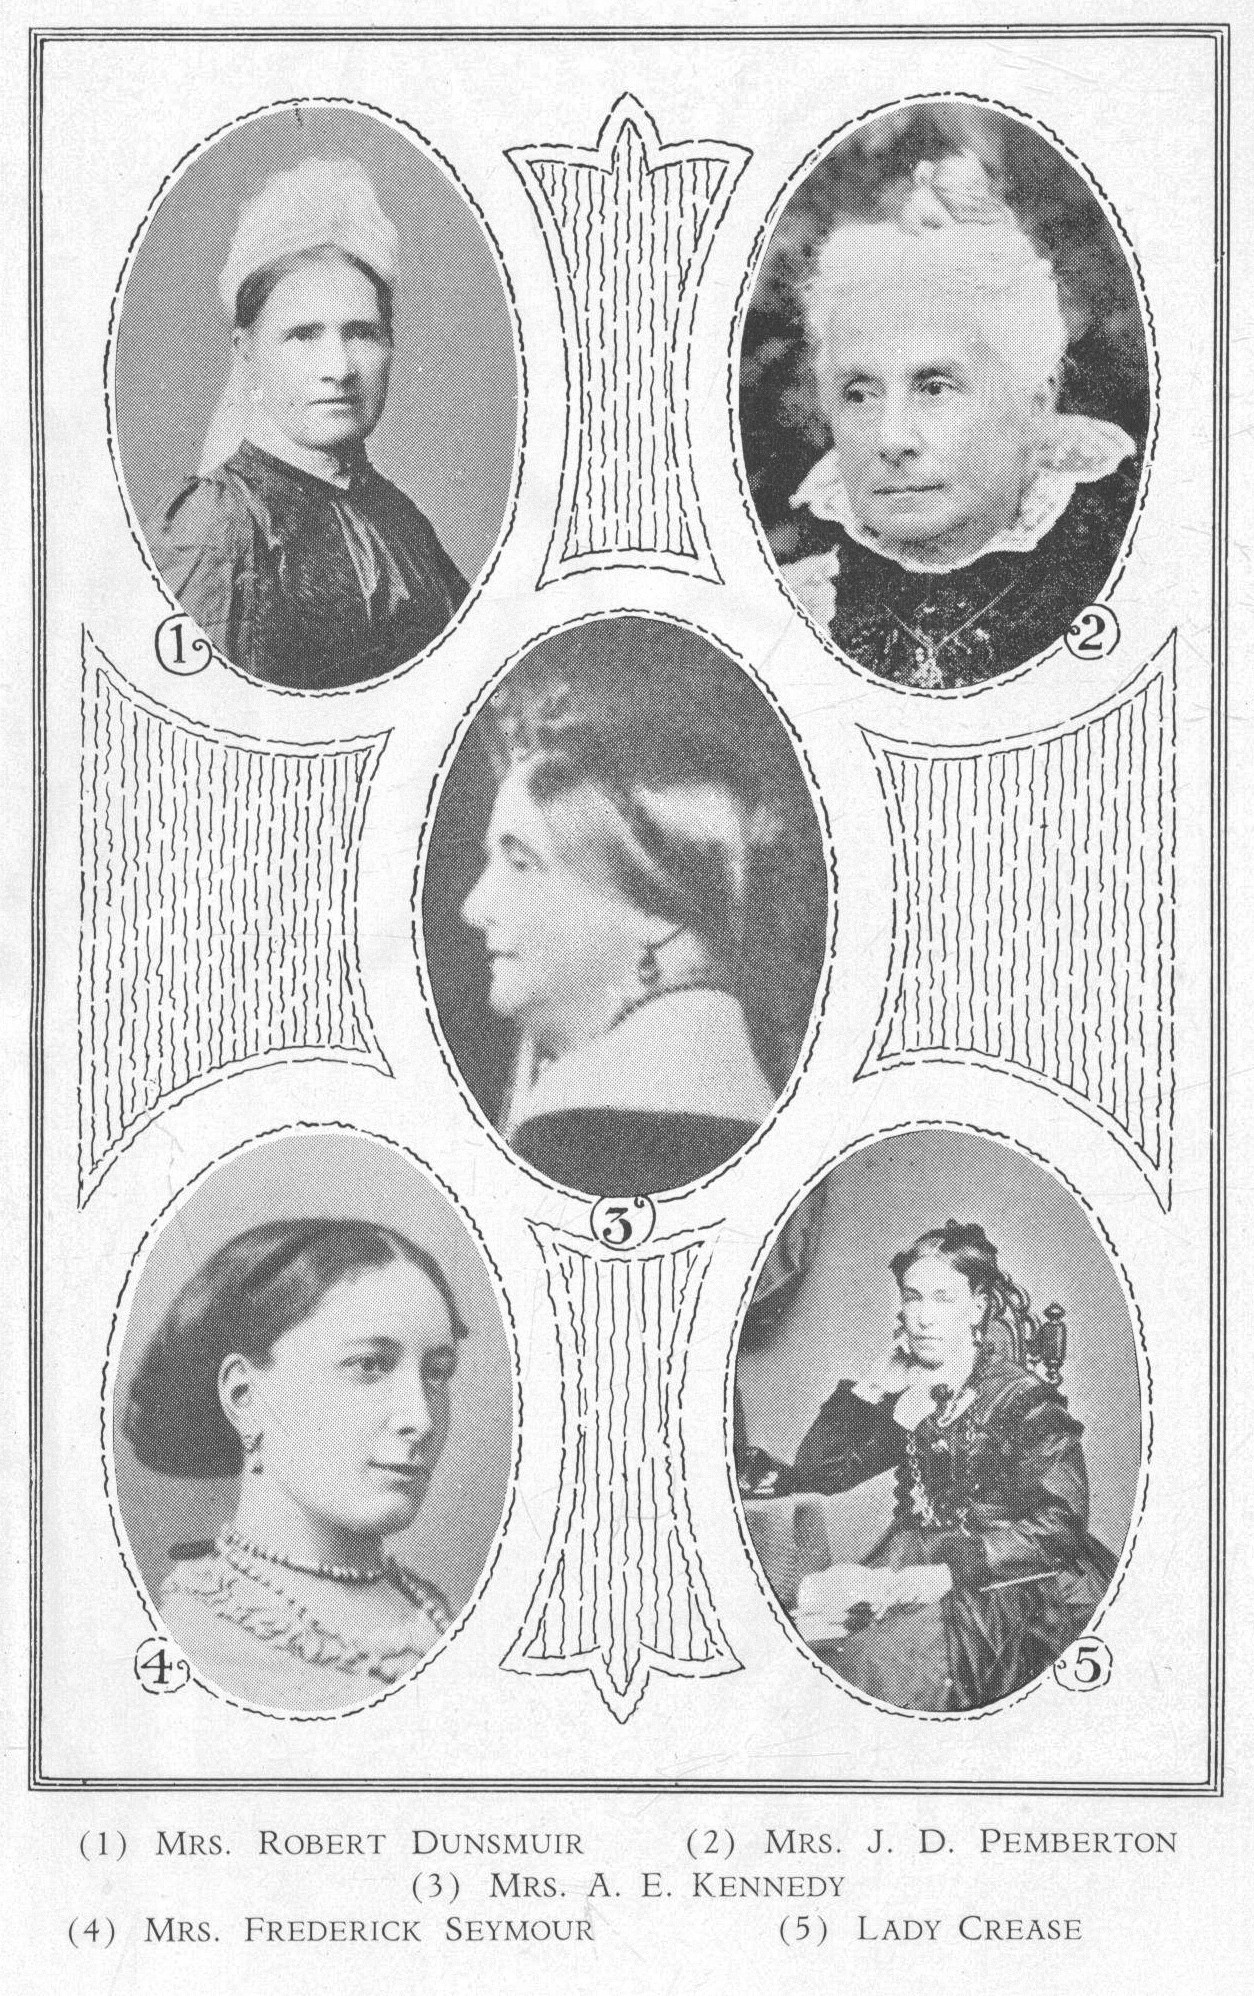 Portraits of five women